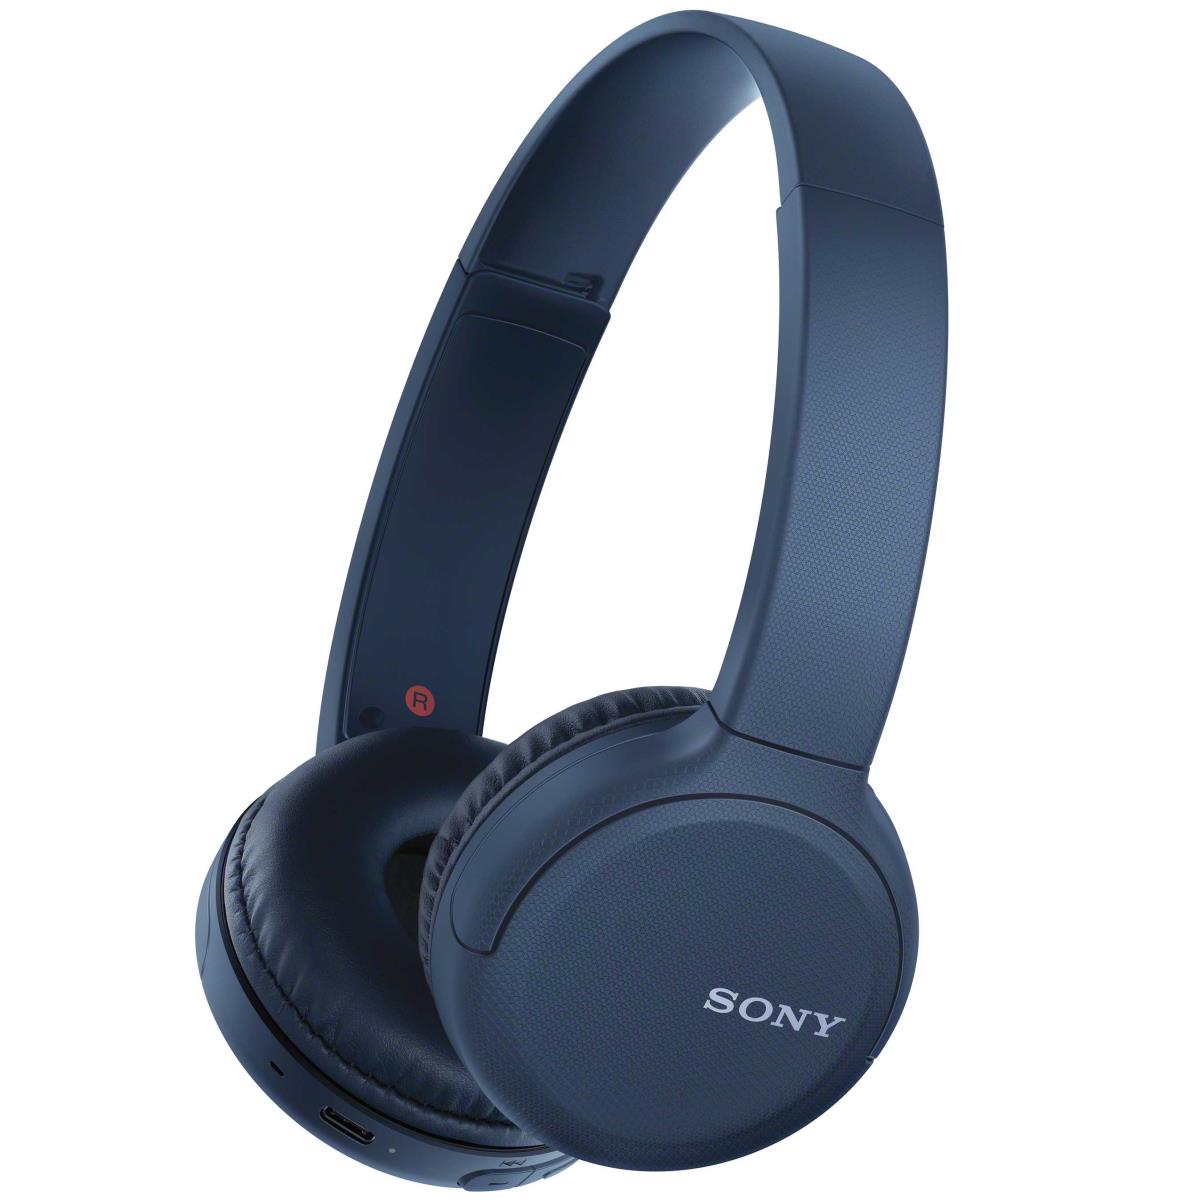 Sony: CH510 Trådlösa Bluetooth hörlurar Blåa